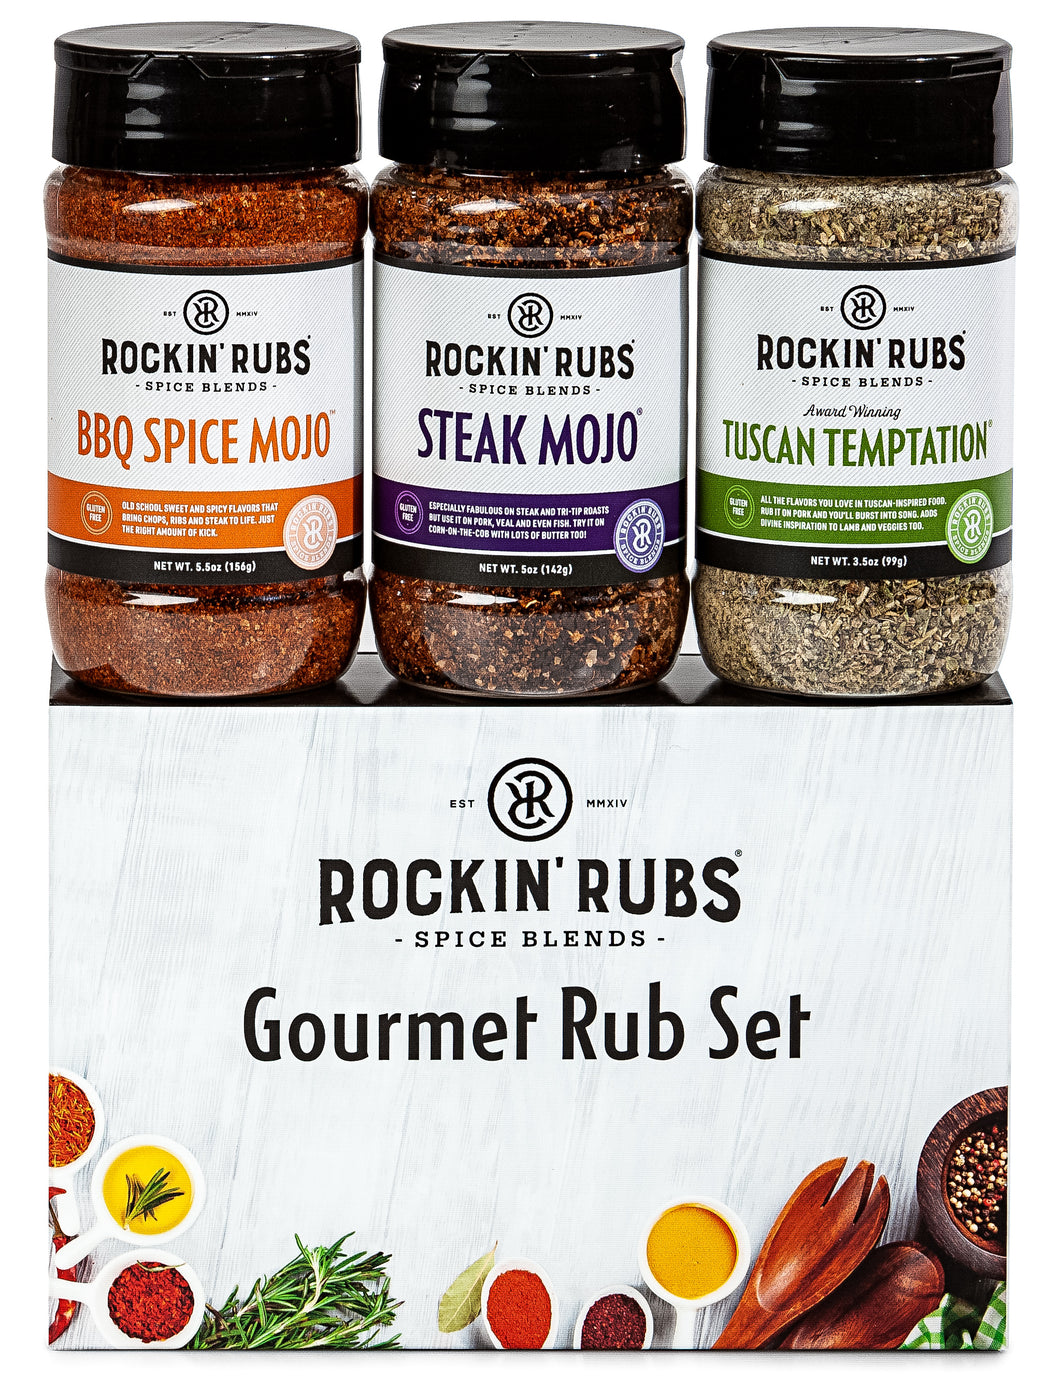 Gourmet Rub 3-pack Gift Set (includes BBQ Spice Mojo, Steak Mojo, Tuscan Temptation)